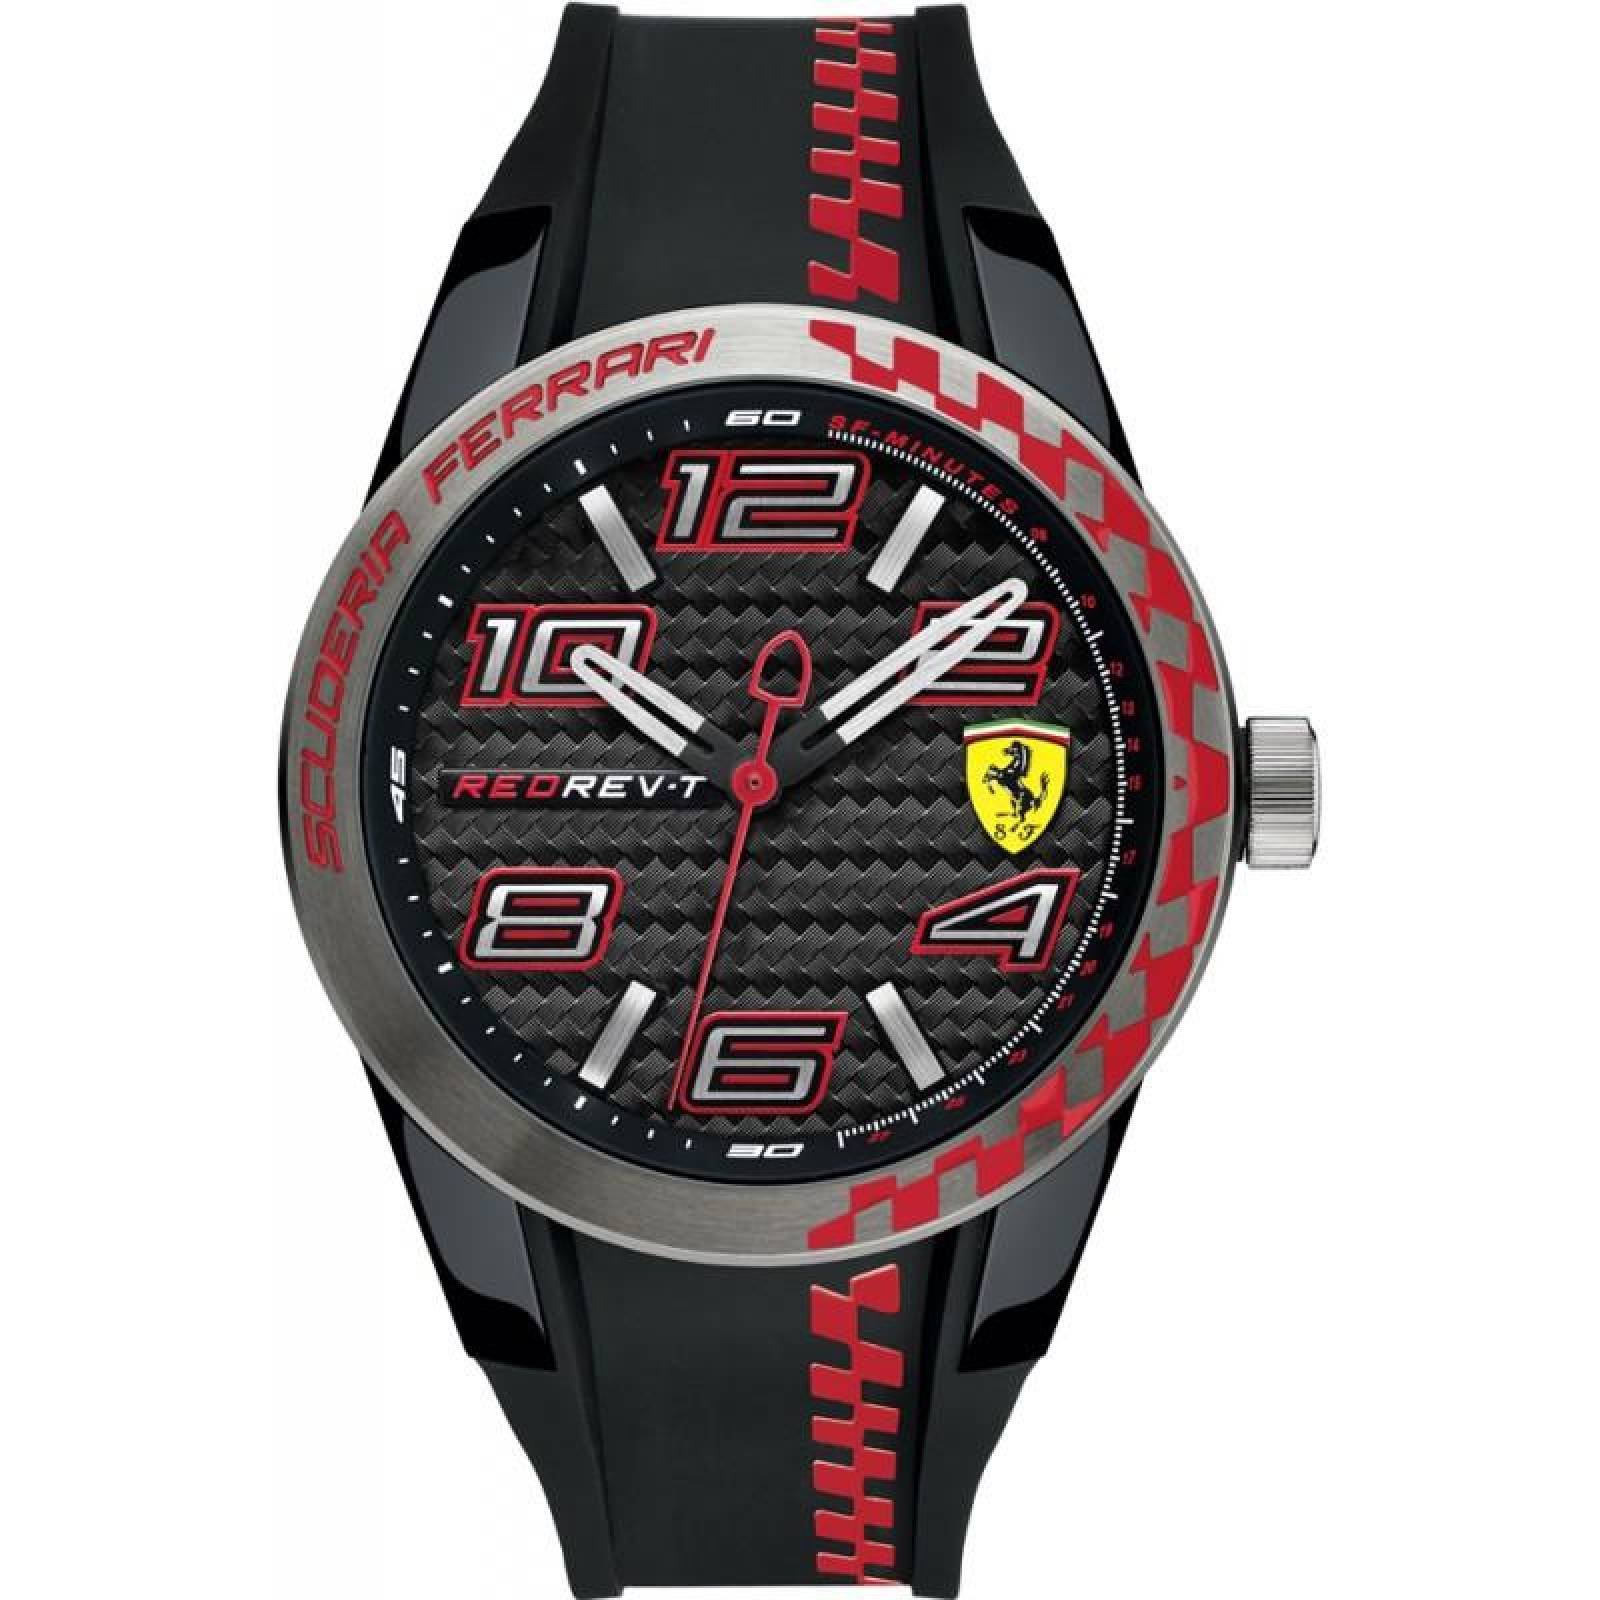 Ferrari часов. Часы Scuderia Ferrari Red Rev. Часы Феррари Скудерия оригинал. Часы мужские Ferrari Scuderia XX kers. Ferrari Scuderia часы ремешок.